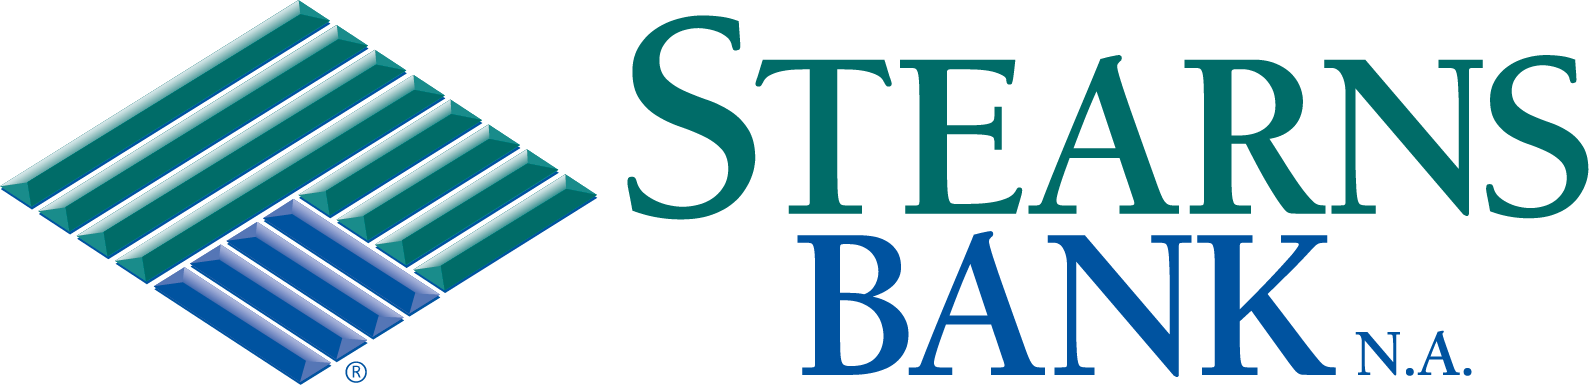 Stearns Bank N.A. Company Logo